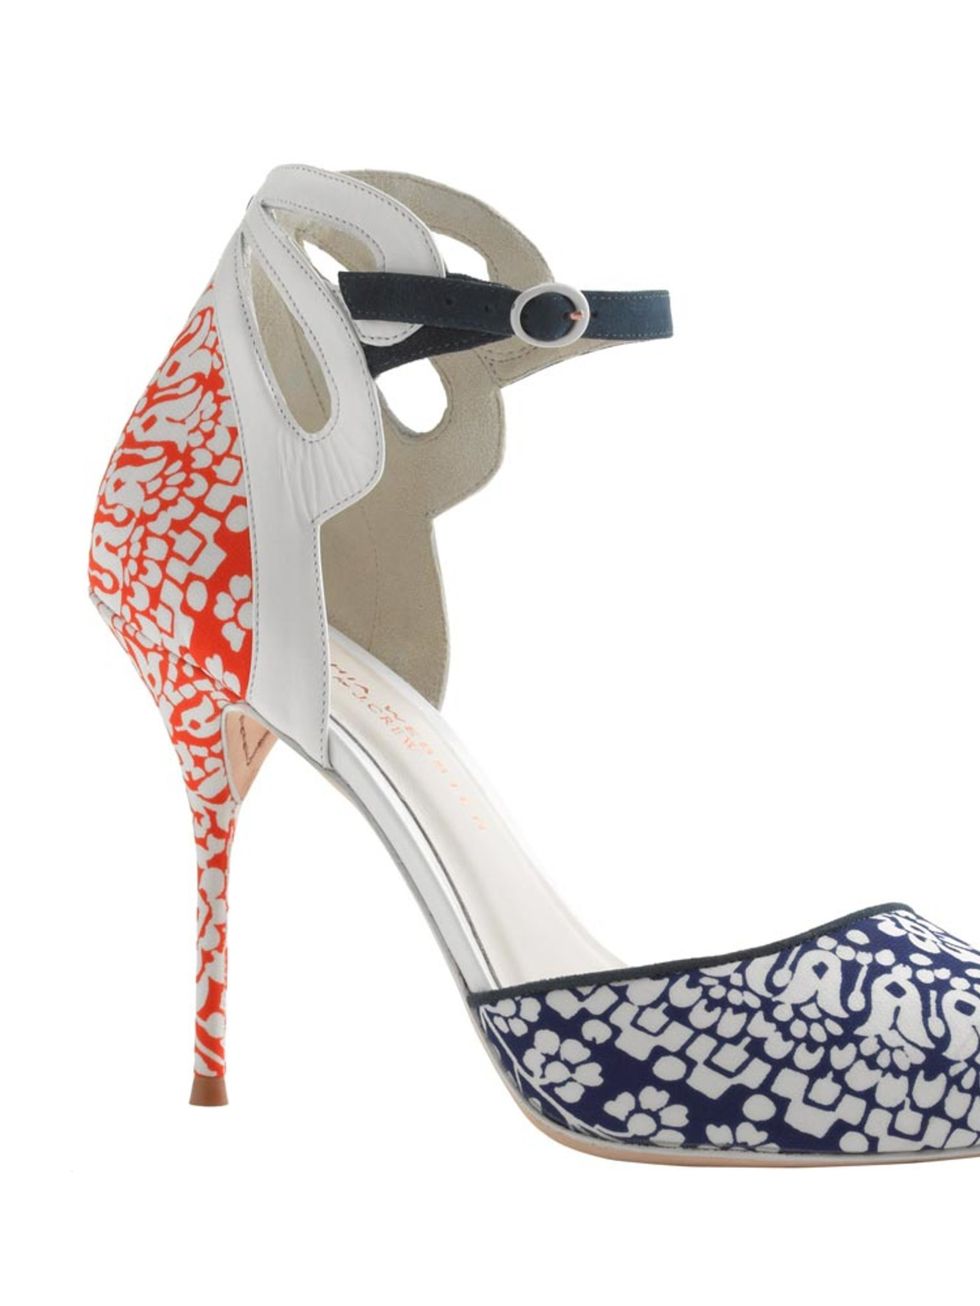 High heels, Sandal, Basic pump, Foot, Bridal shoe, Beige, Court shoe, Dancing shoe, Slingback, Fashion design, 